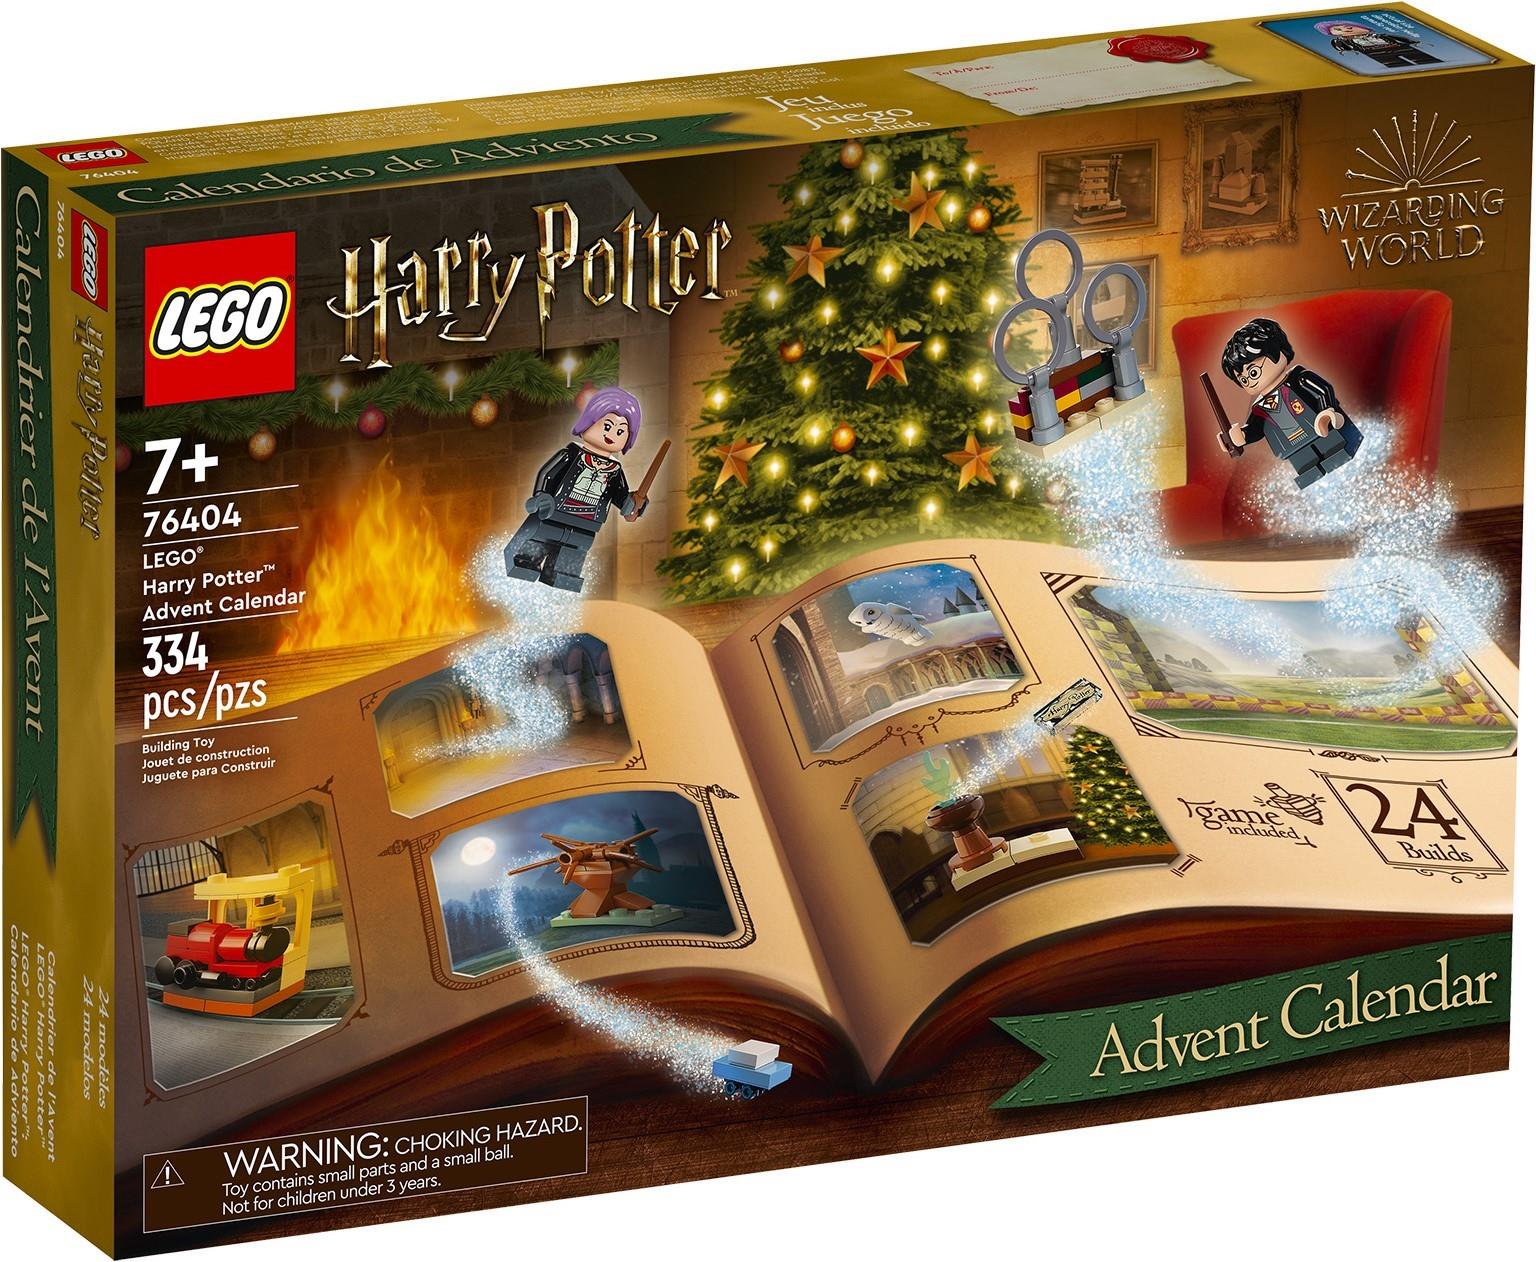 LEGO® Harry Potter™ 75981 Calendrier de l'Avent LEGO® Harry Potter™ - Lego  - Achat & prix